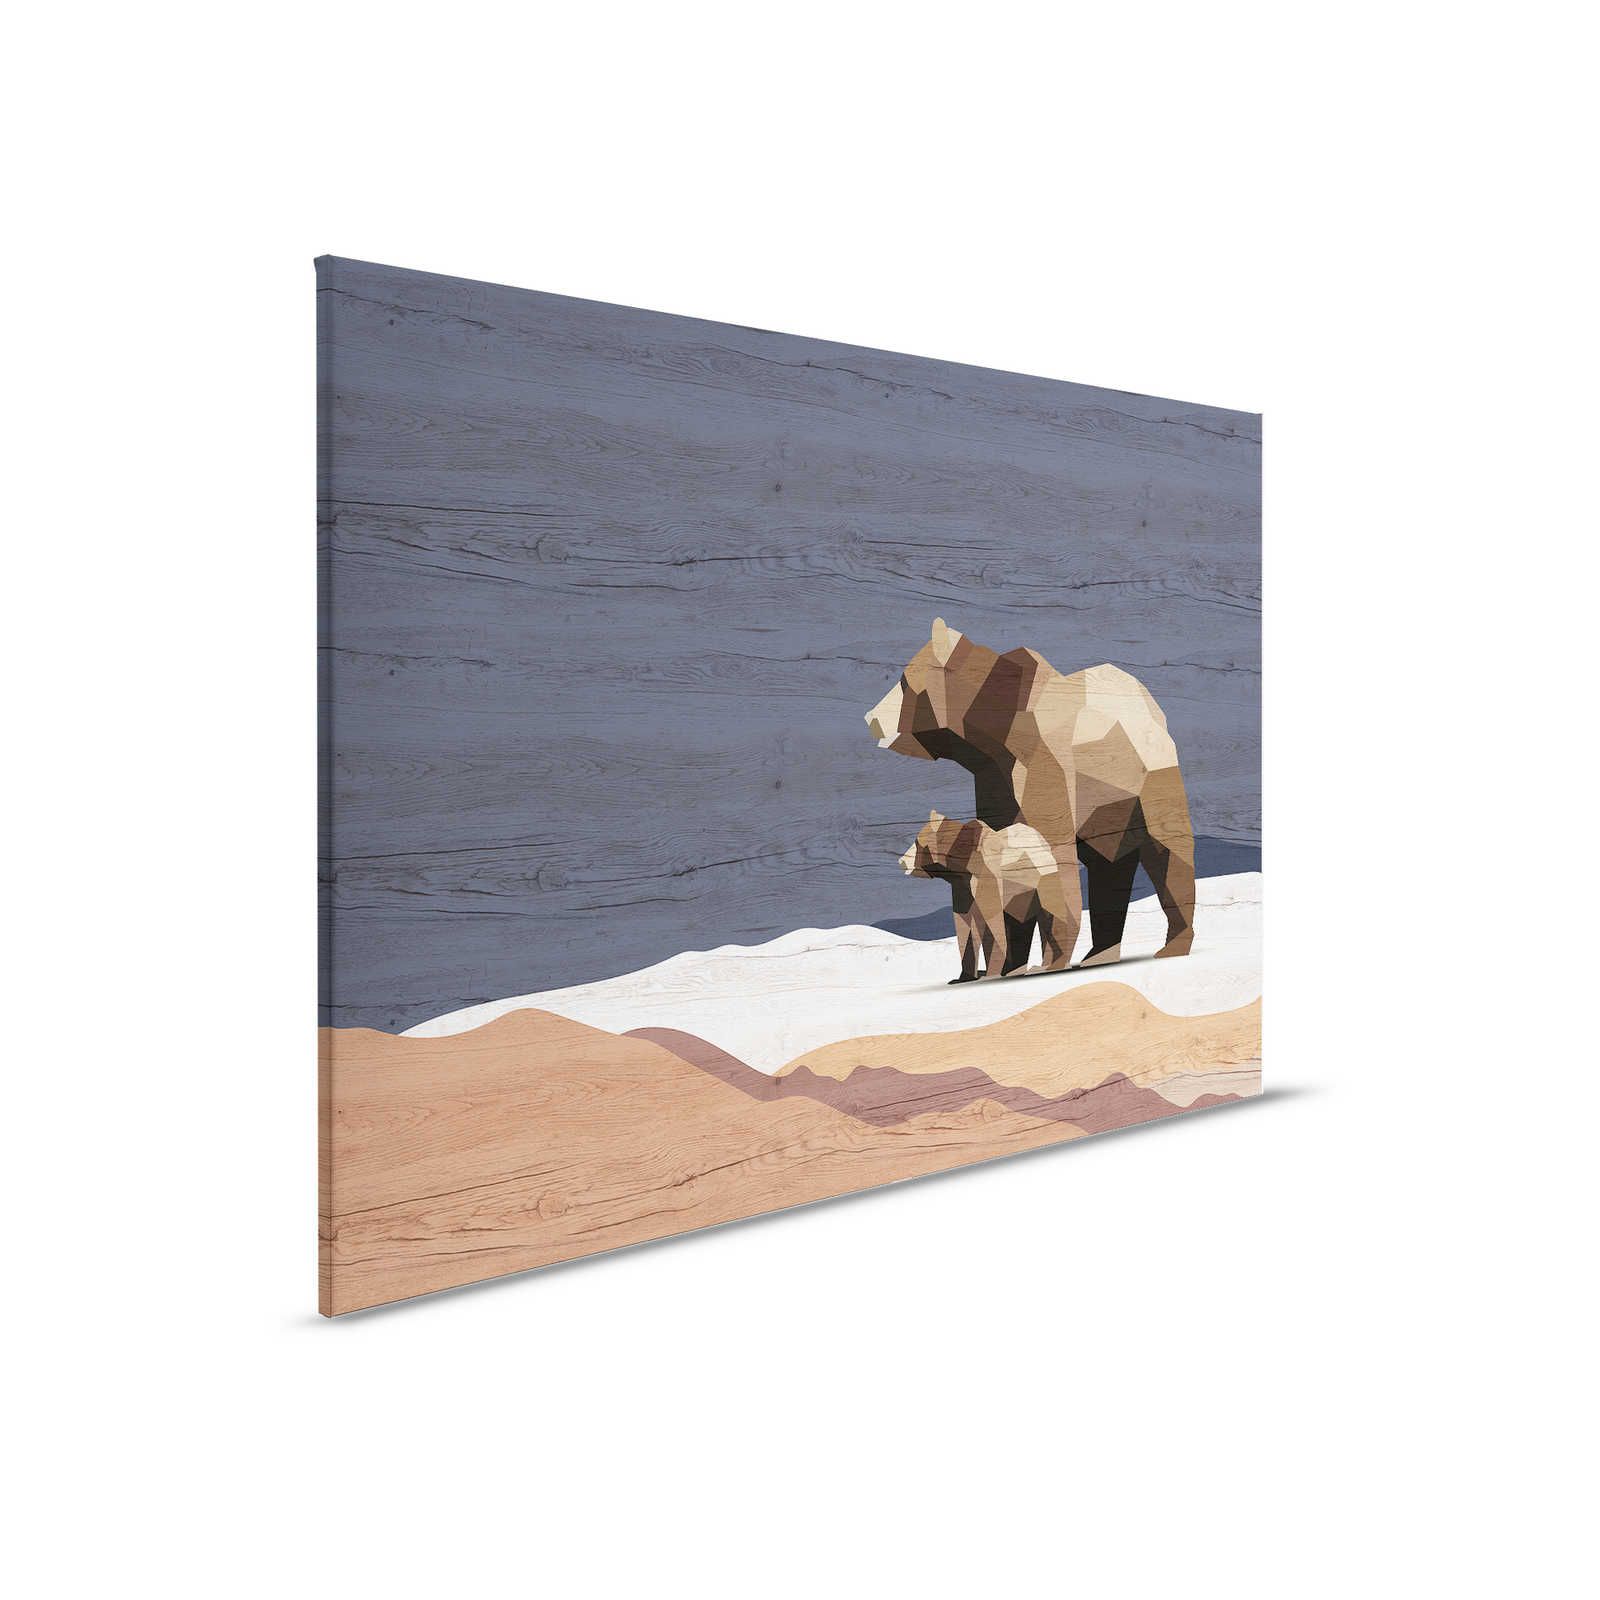 Yukon 3 - Canvas schilderij Bears Family in facetdesign & houtlook - 0,90 m x 0,60 m
